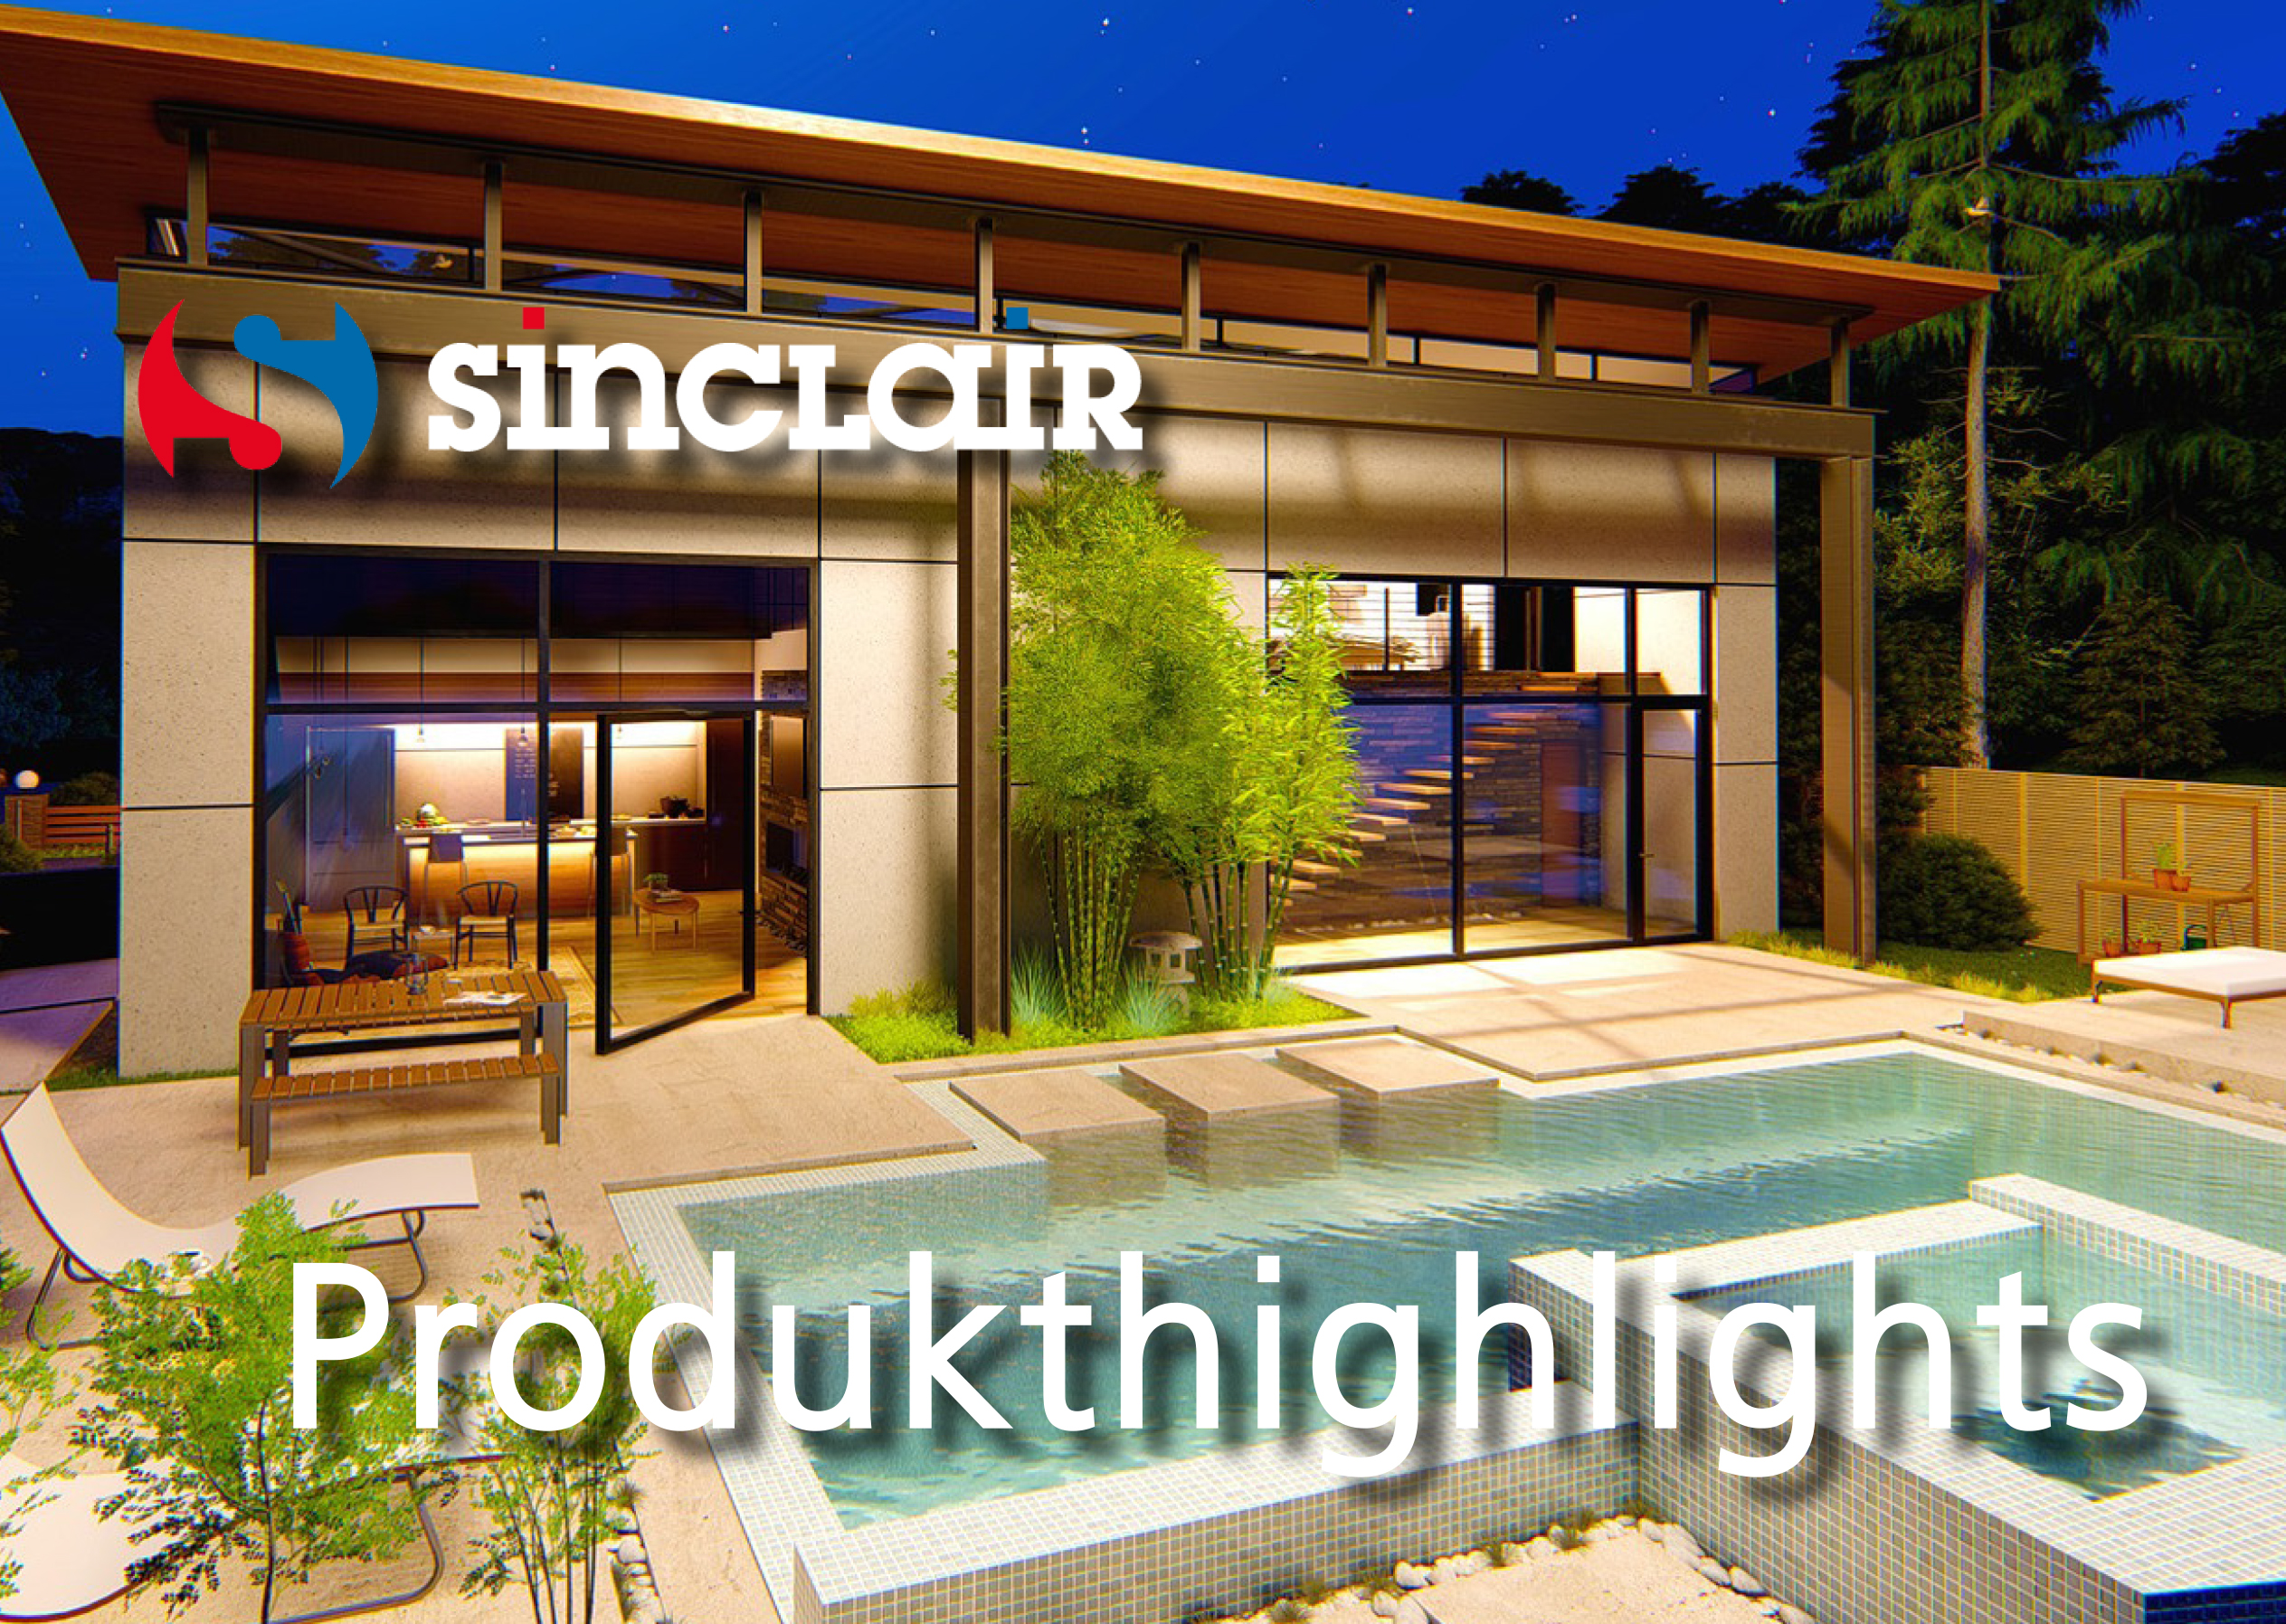 Sinclair Produkthighlights